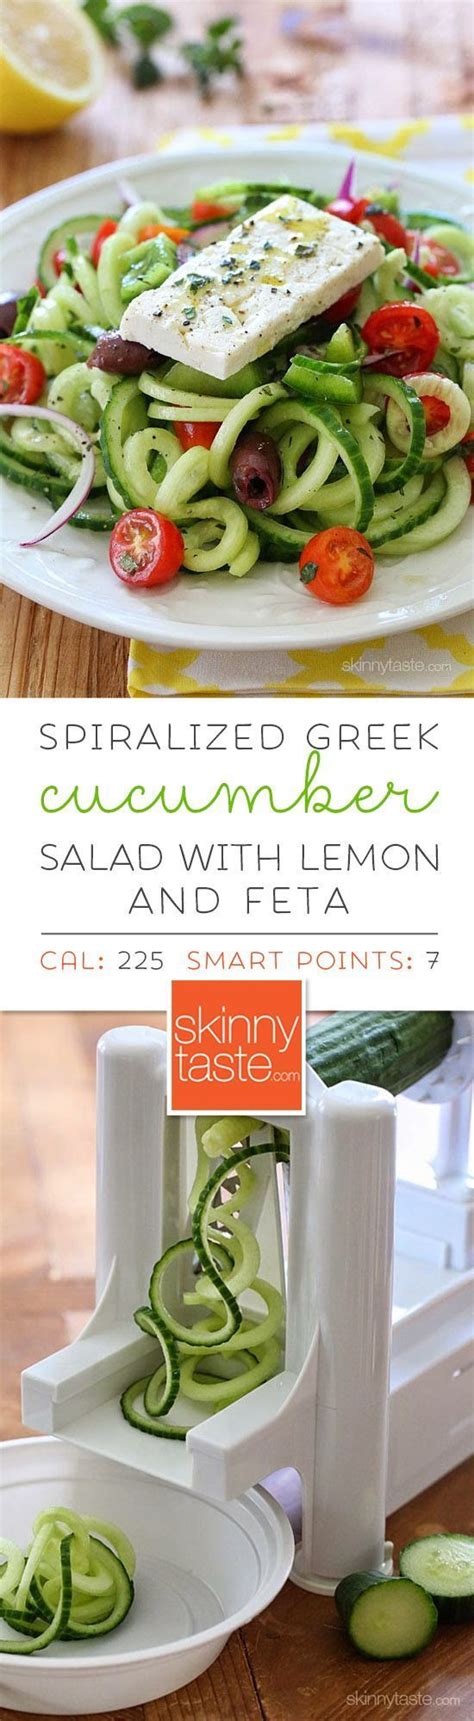 Spiralized Greek Cucumber Salad With Lemon And Feta Recipe